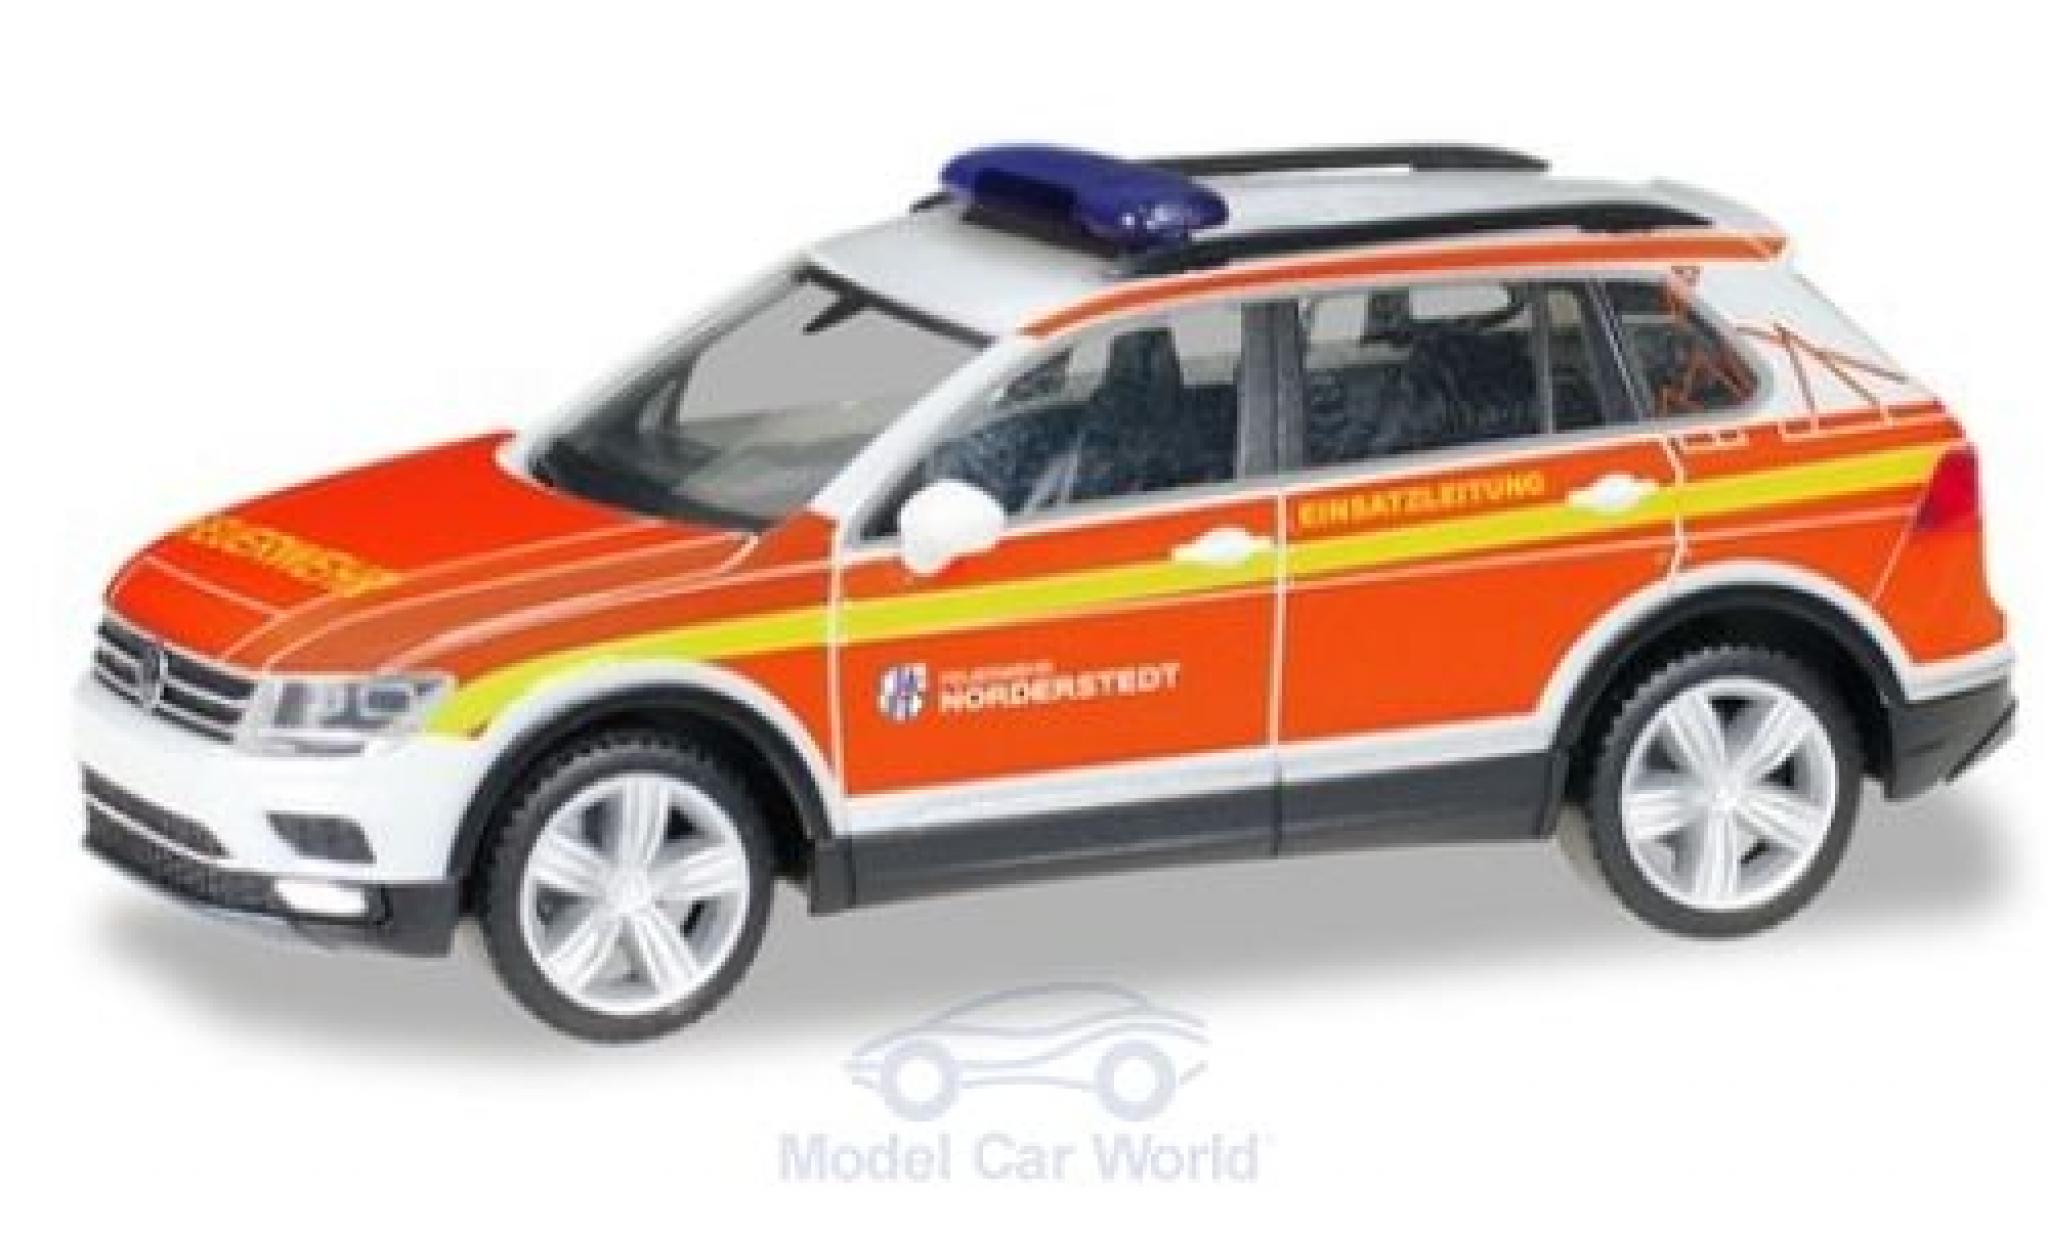 Wiking Modellauto Wiking N 1/160 092004 Feuerwehr - VW Tiguan